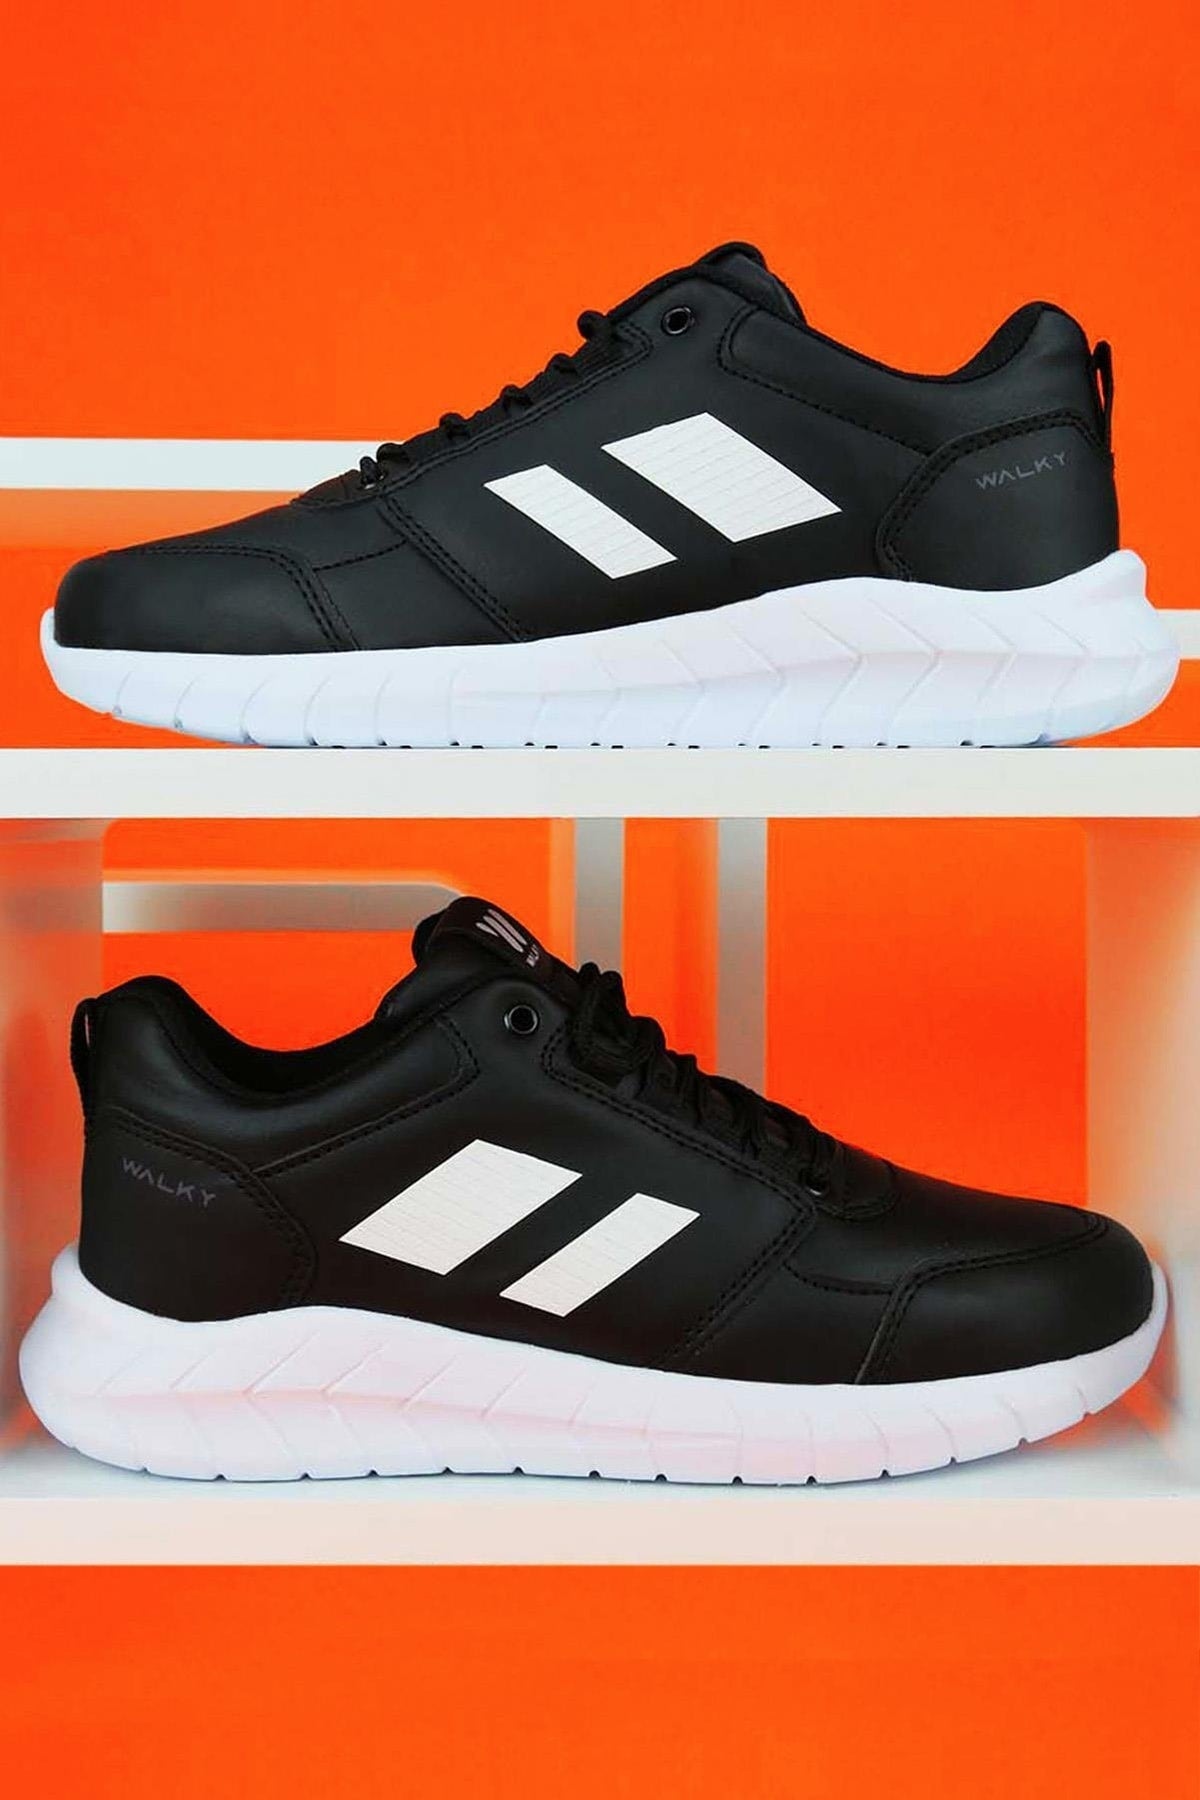 - Jaws Black - White Ultra Light Comfortable Flexible Men's Casual Sports Sneaker Shoes